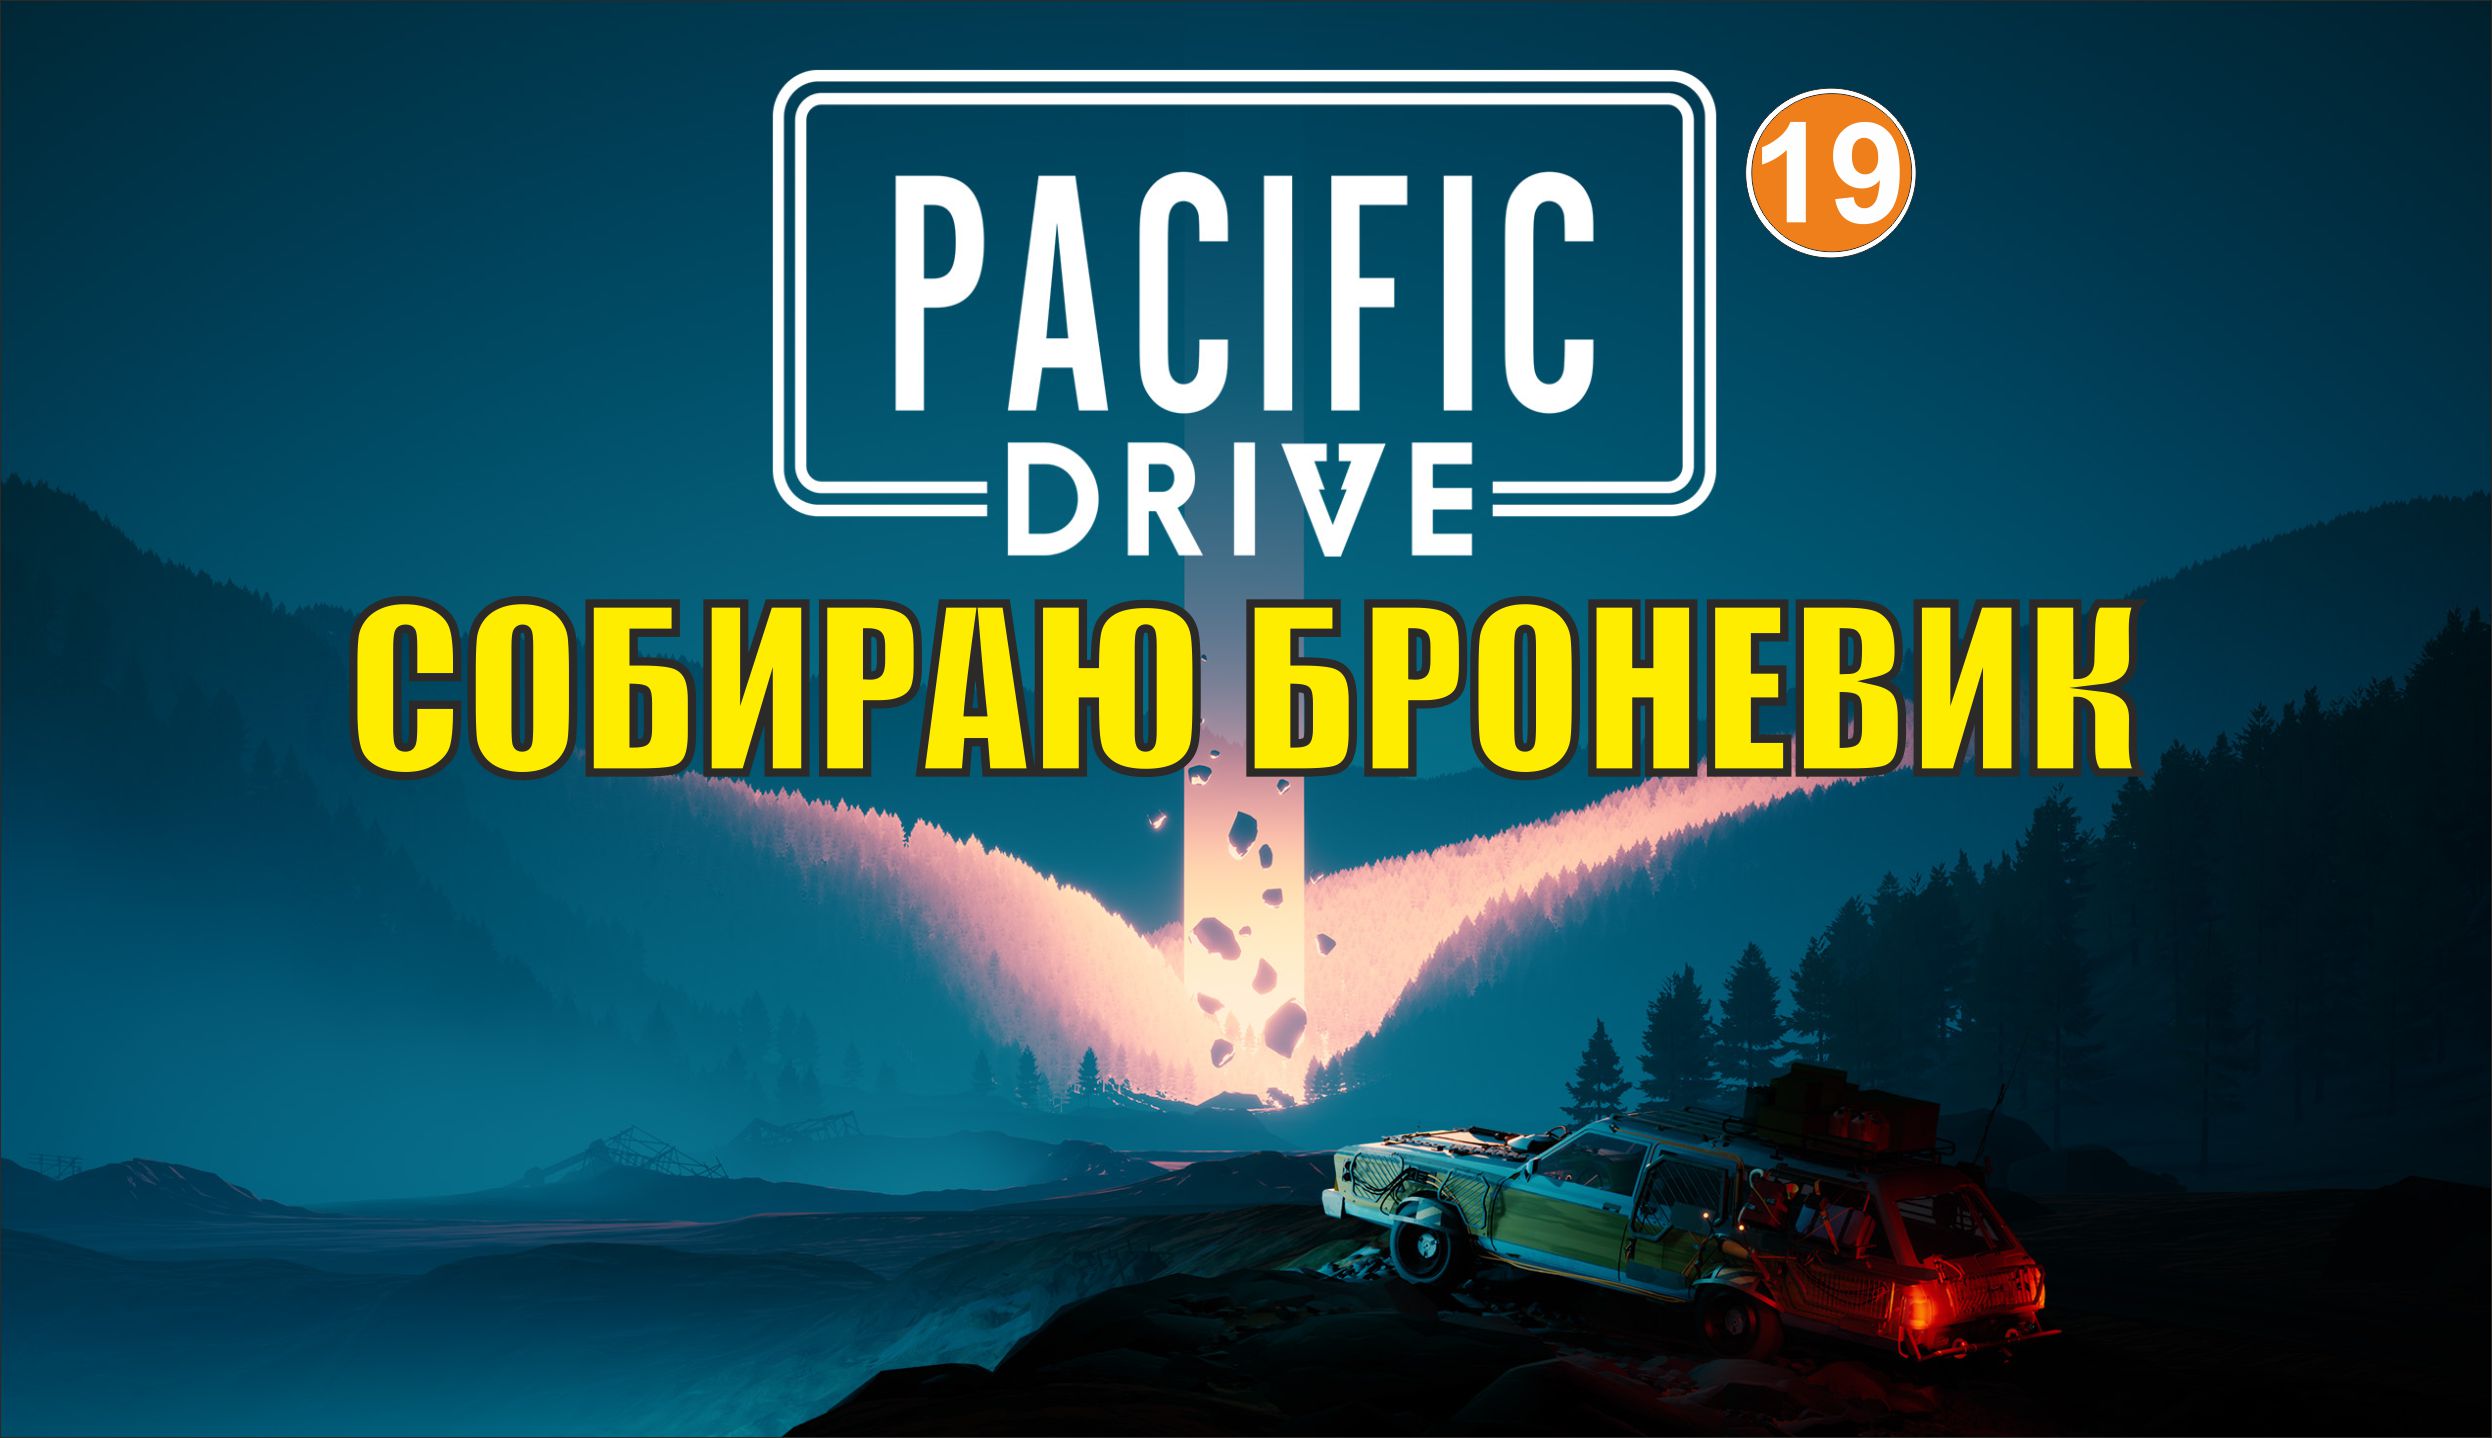 Pacific Drive - Собираю броневик